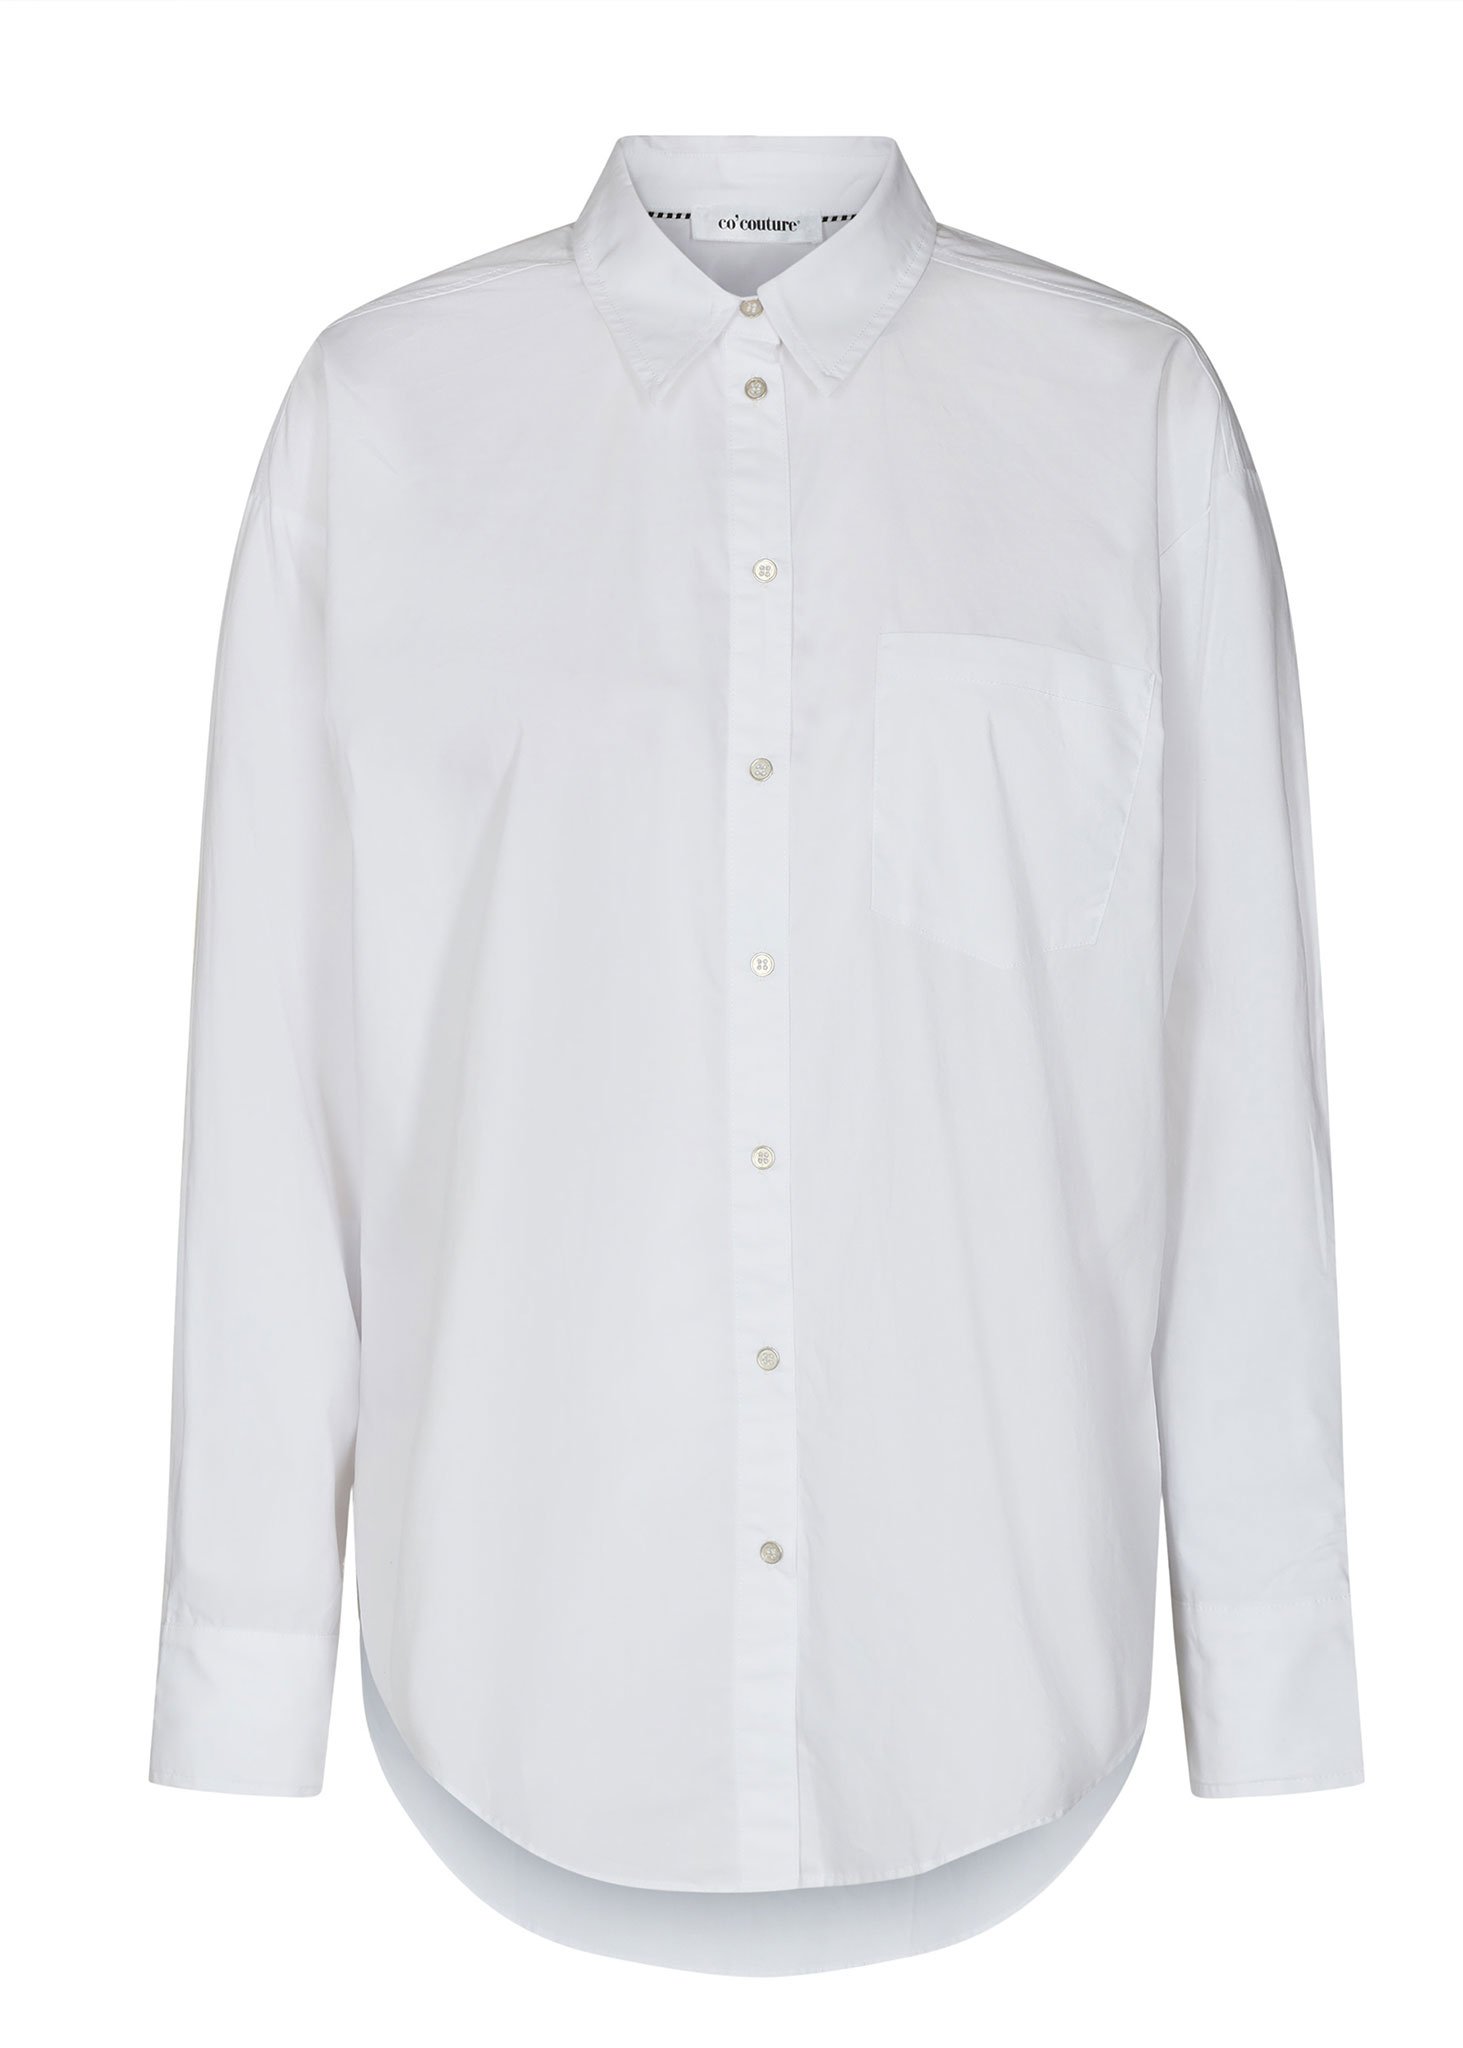 Coriolis Oversize Shirt White-1